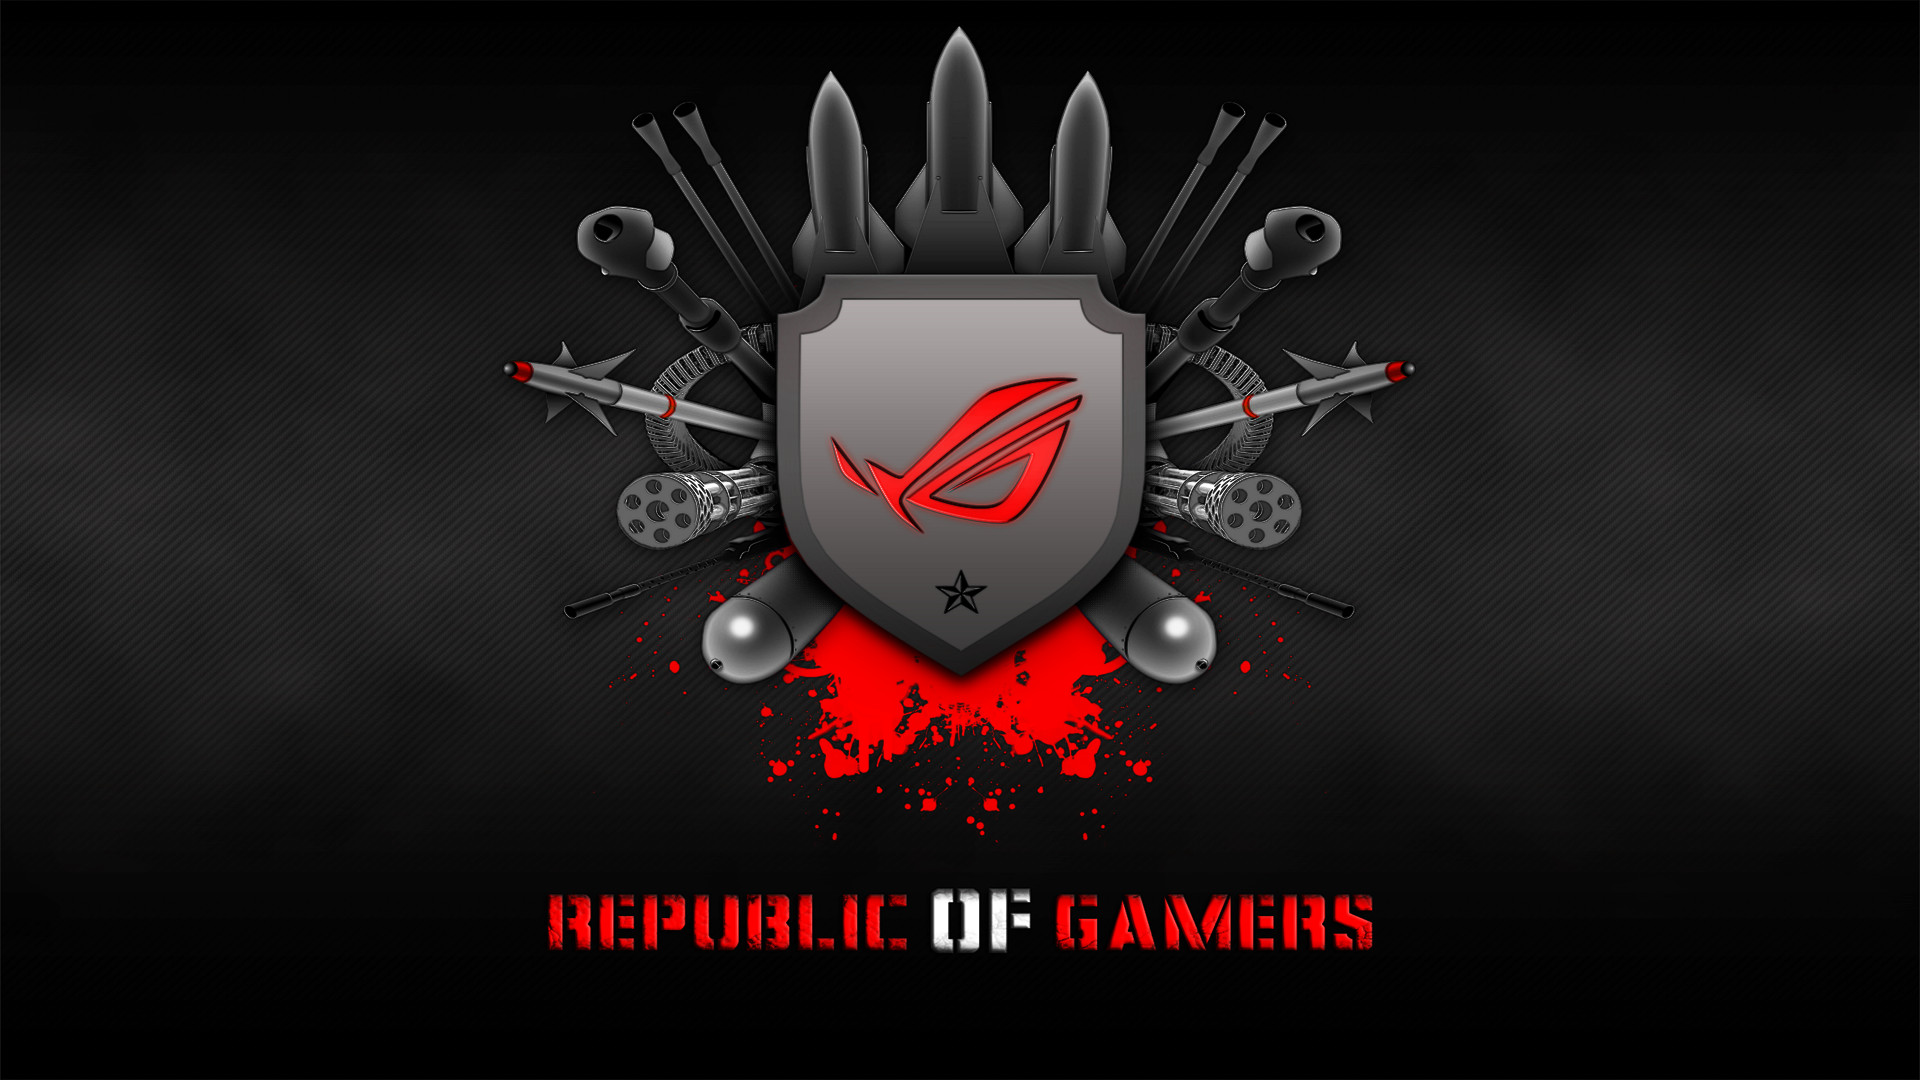 Republic of Gamers HD Wallpaper 1920×1080